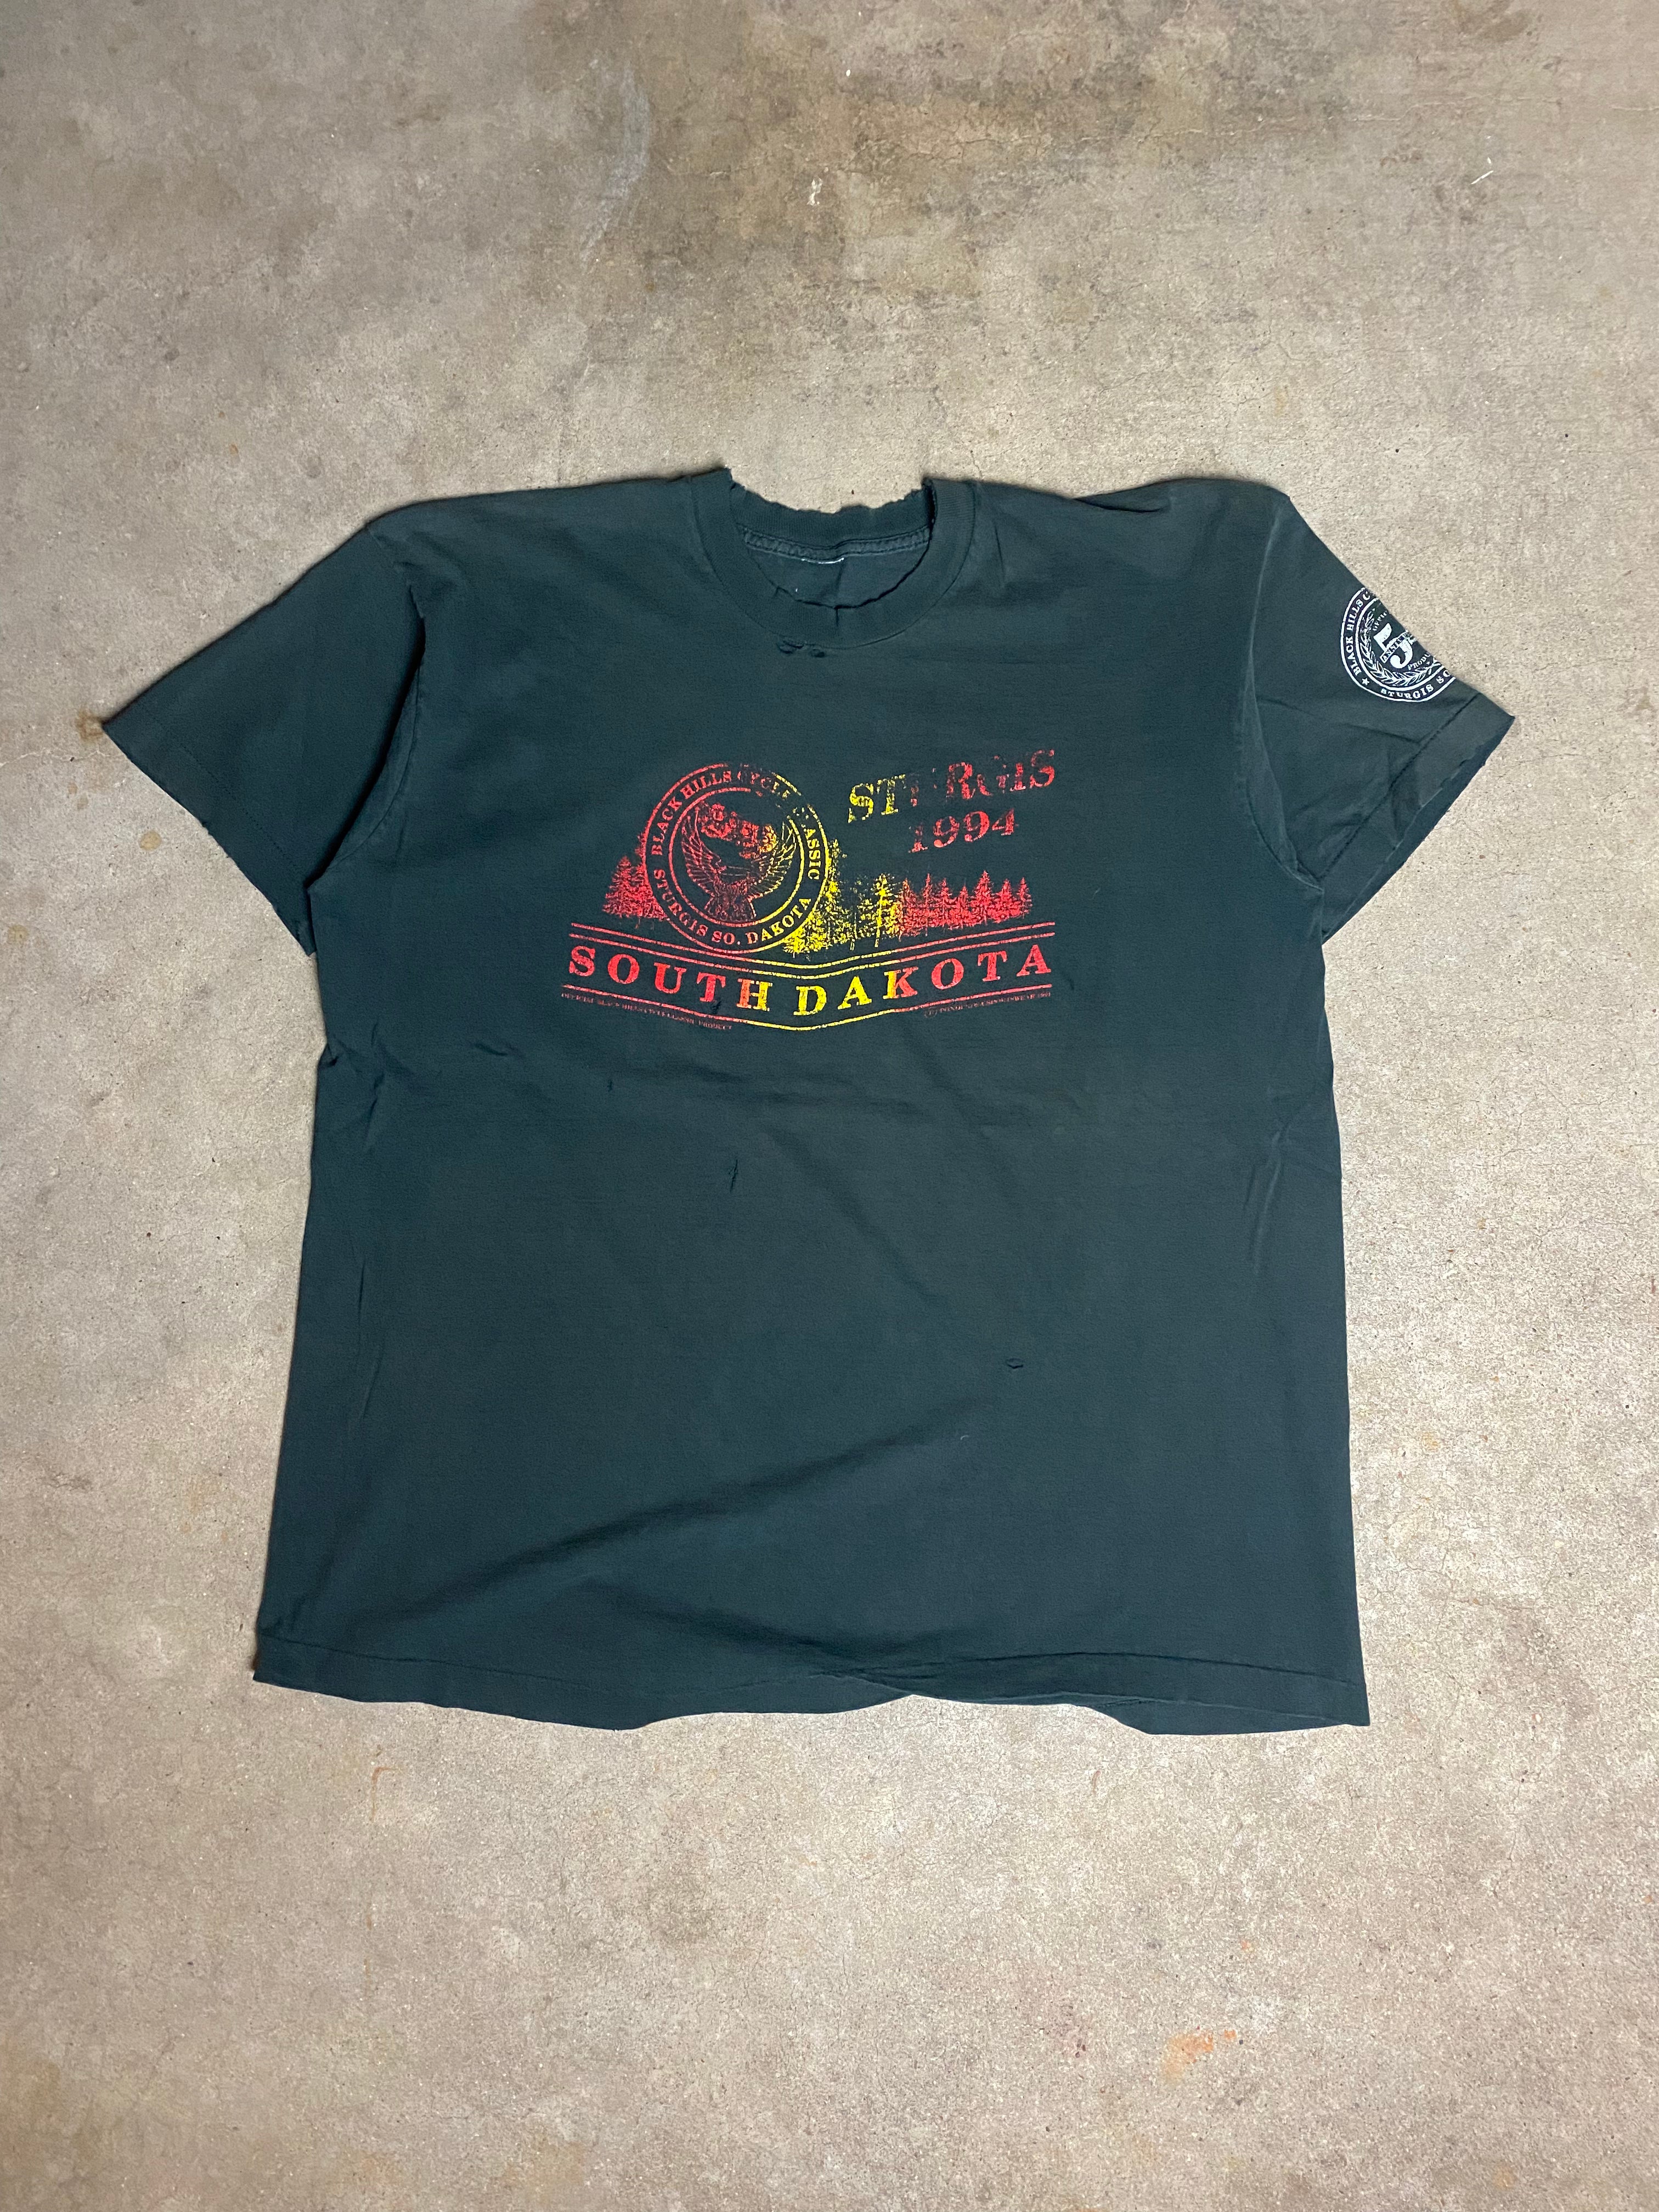 1994 Sturgis South Dakota Thrashed T-Shirt (XL)